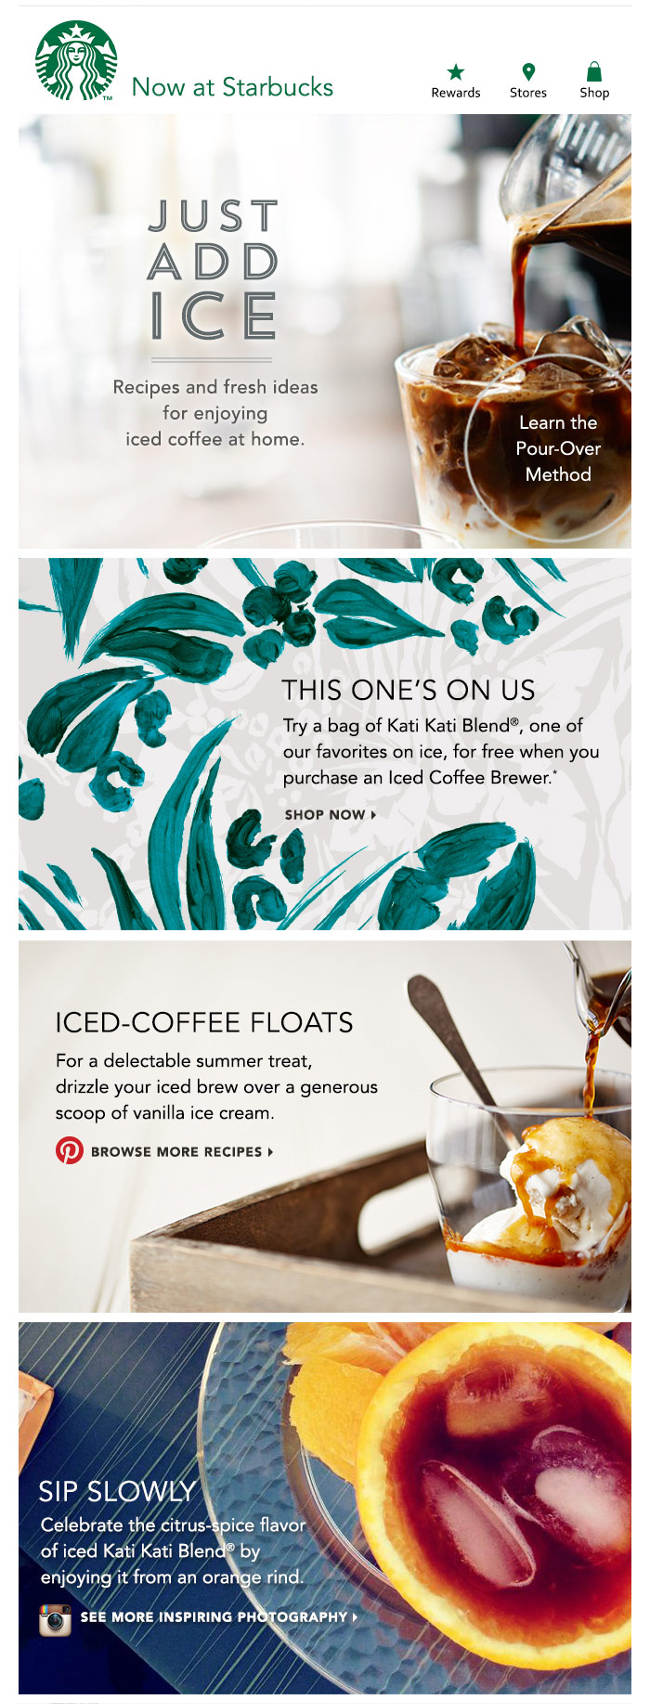 Starbucks newsletter layout examples